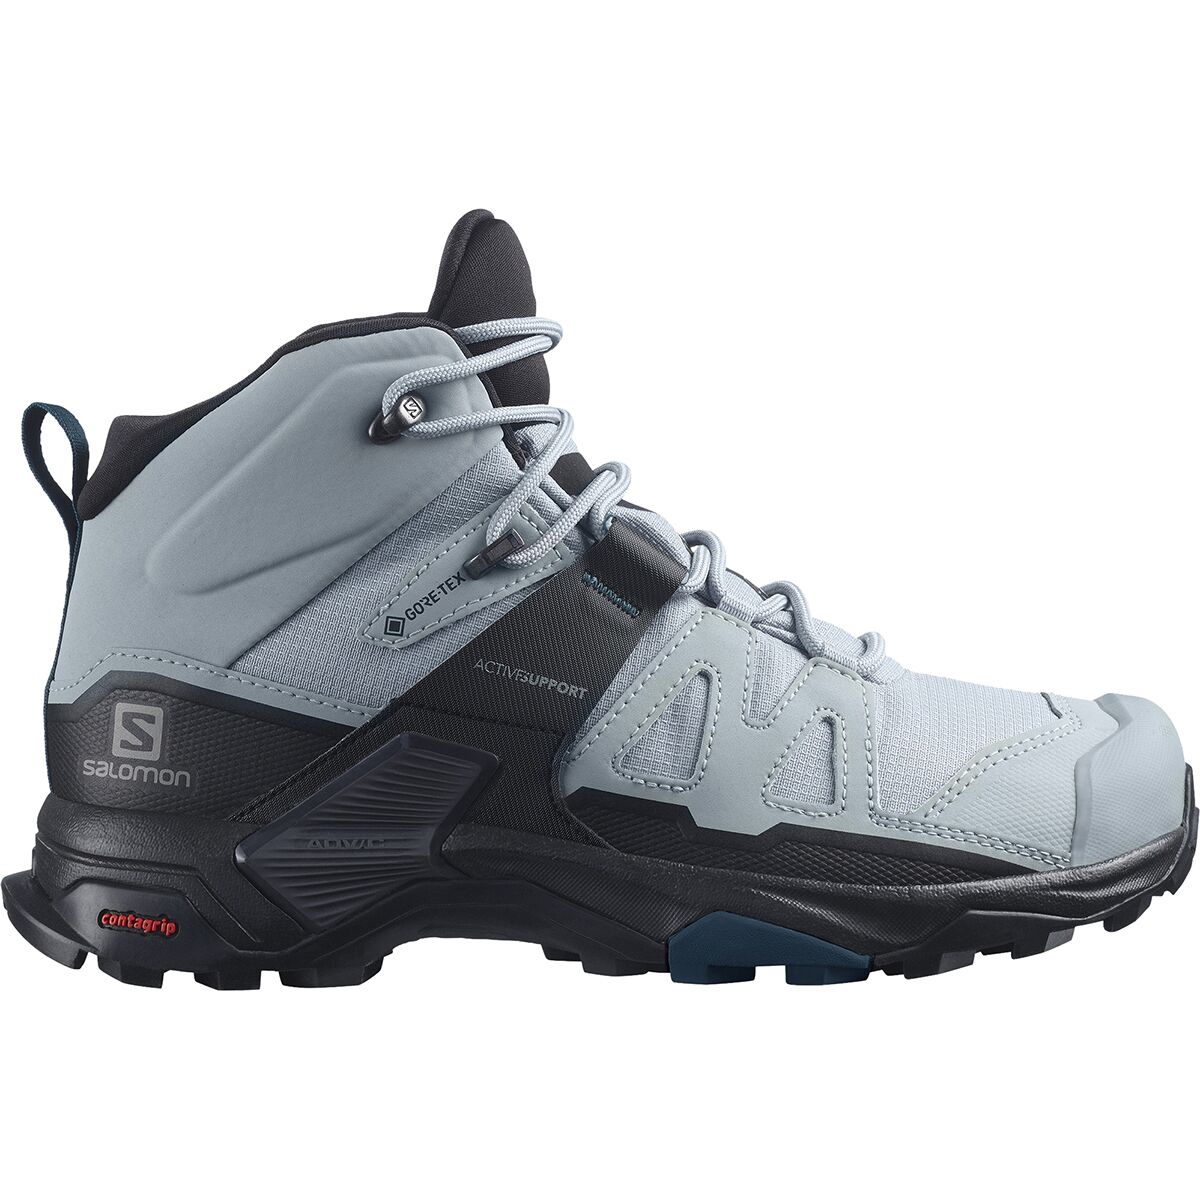 Salomon X Ultra 4 Mid GTX Wide Hiking Boot - Women's